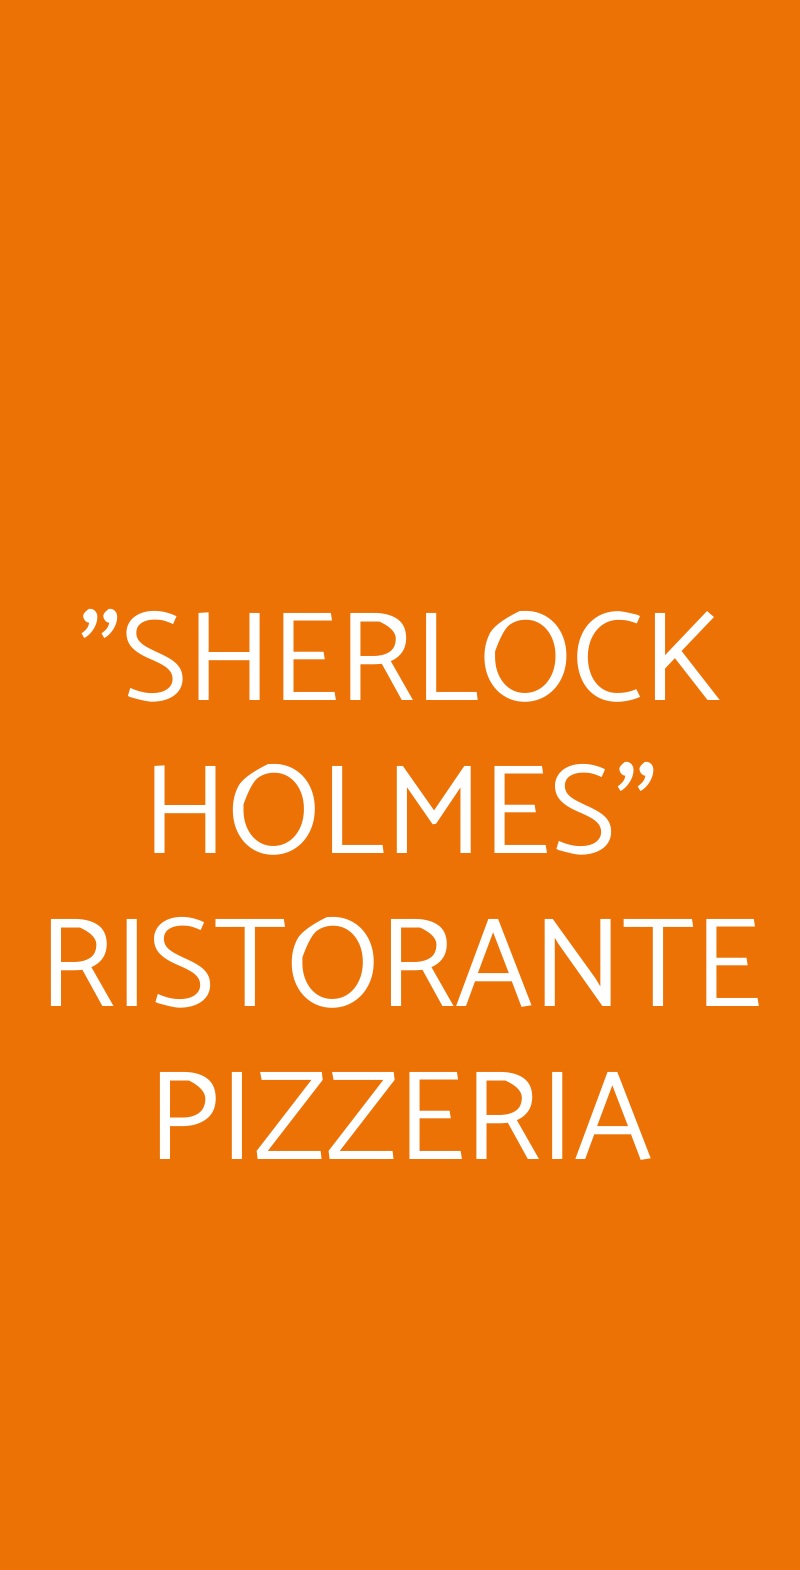 "SHERLOCK HOLMES" RISTORANTE PIZZERIA Siracusa menù 1 pagina